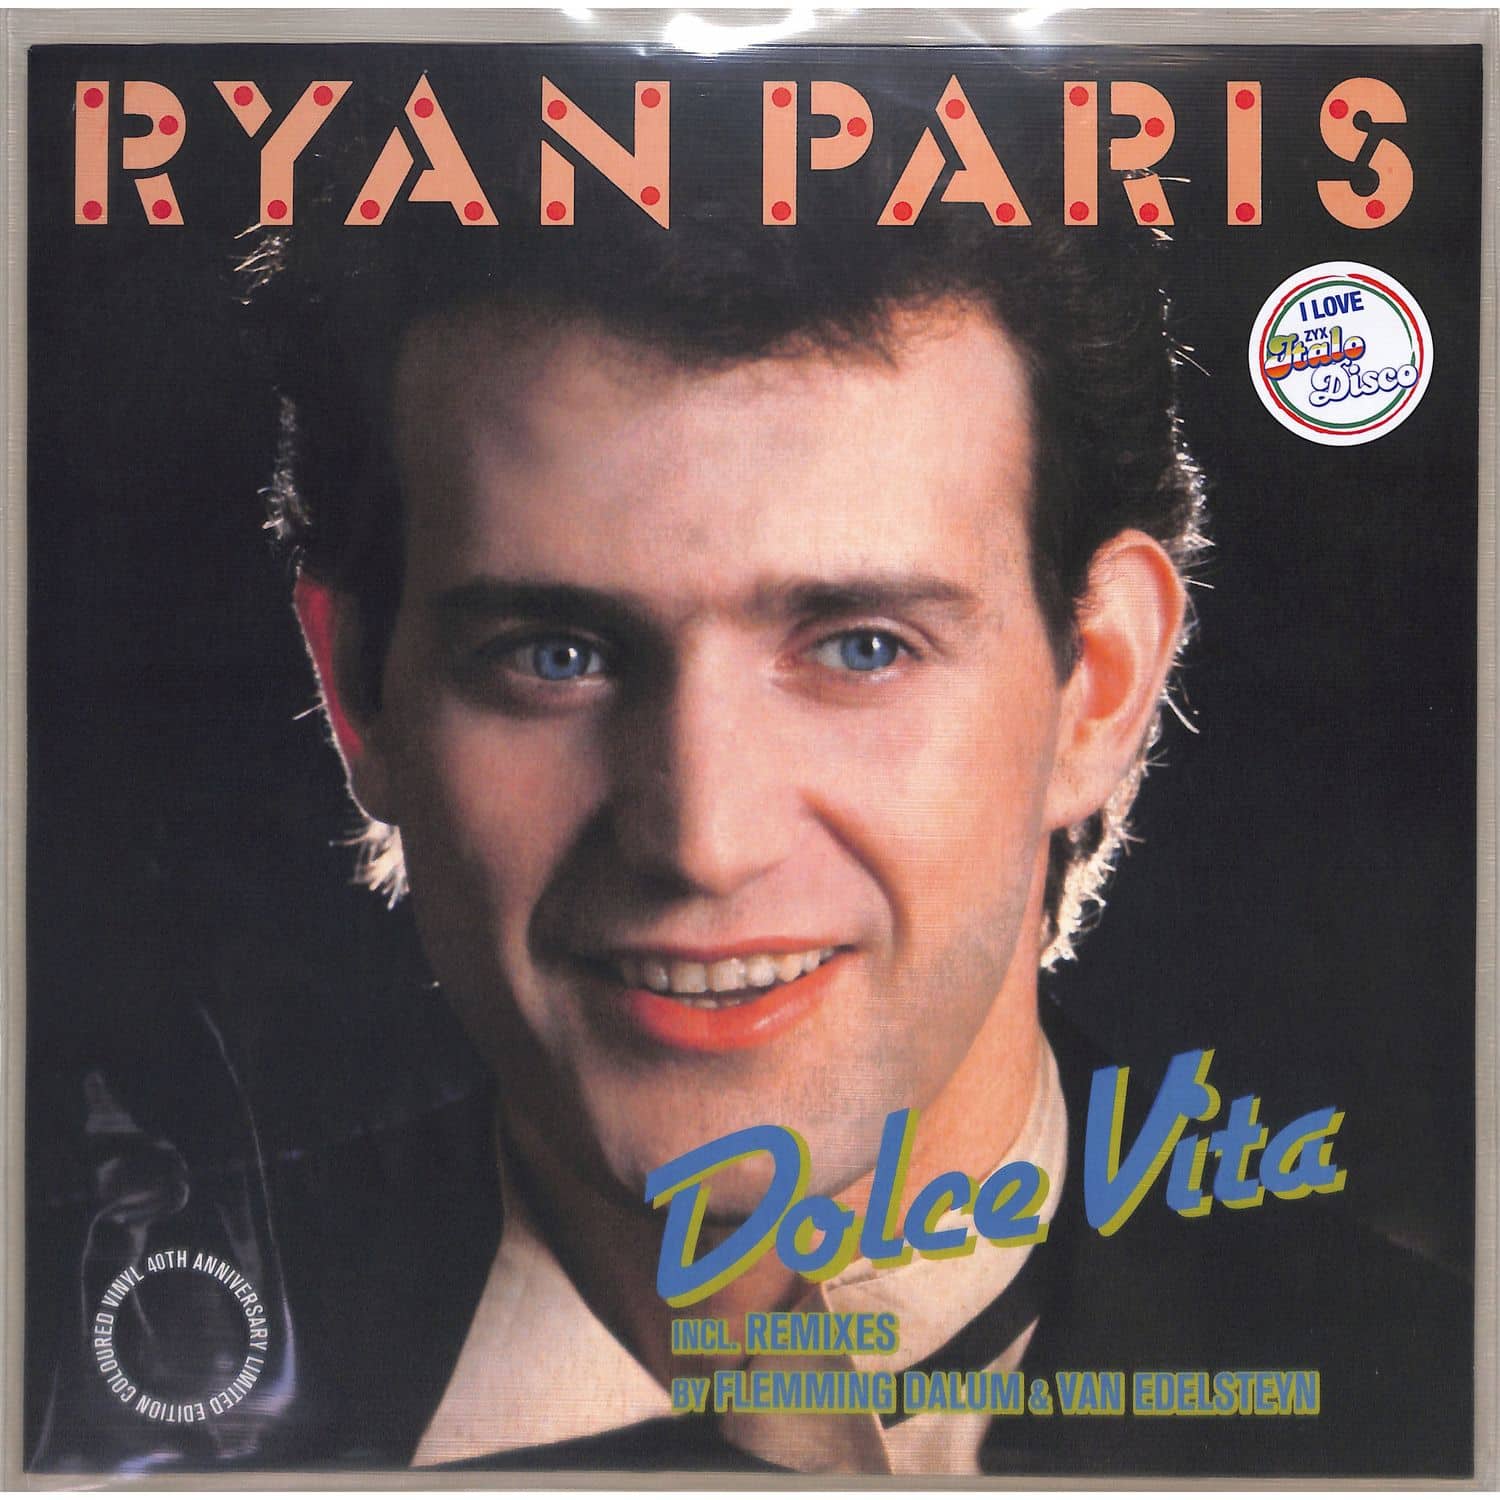 Ryan Paris - DOLCE VITA